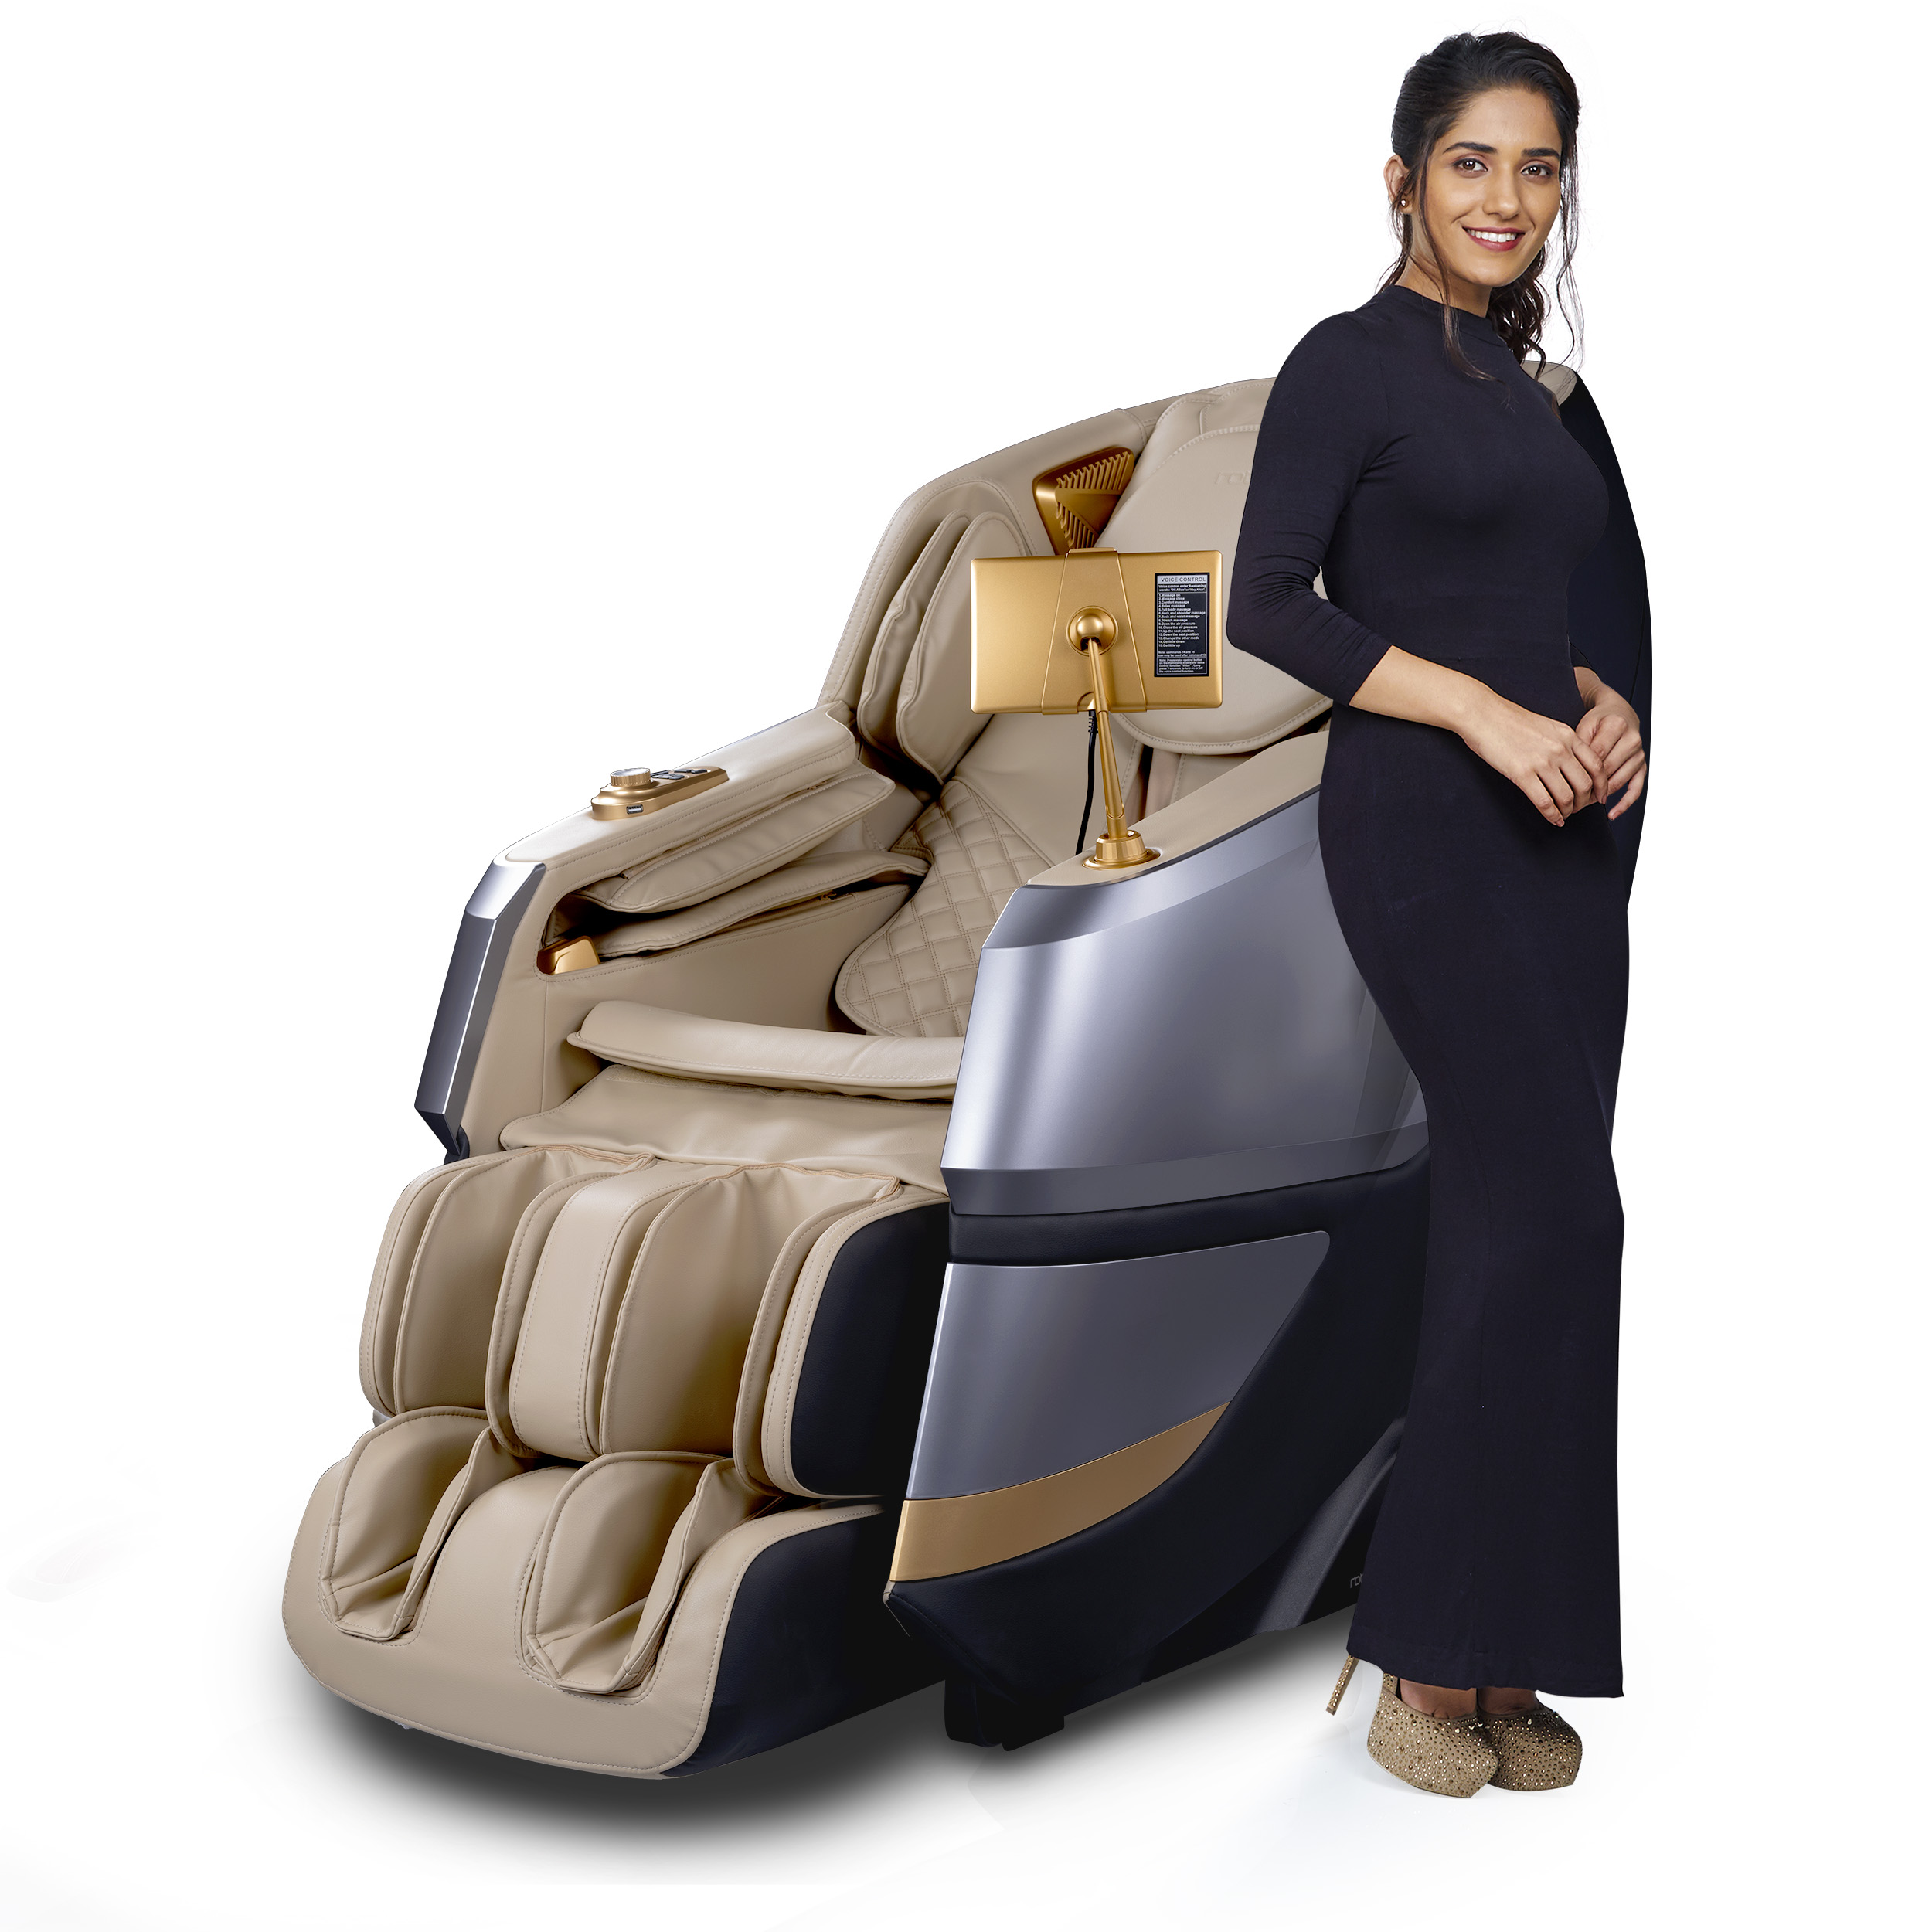 Buy 3d Robotic Massage Chair